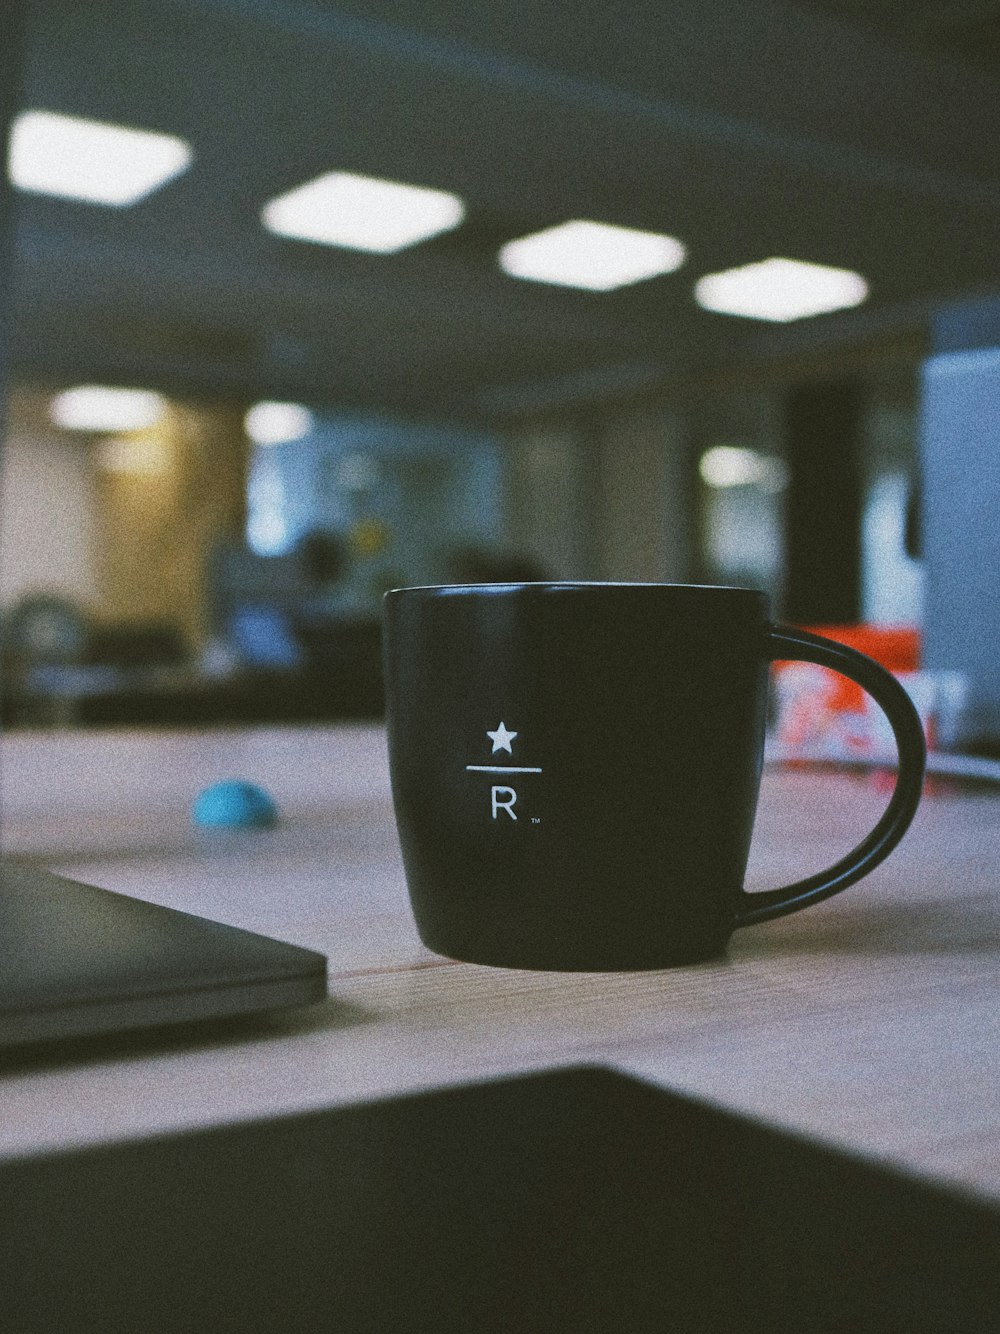 black ceramic mug on wooden table